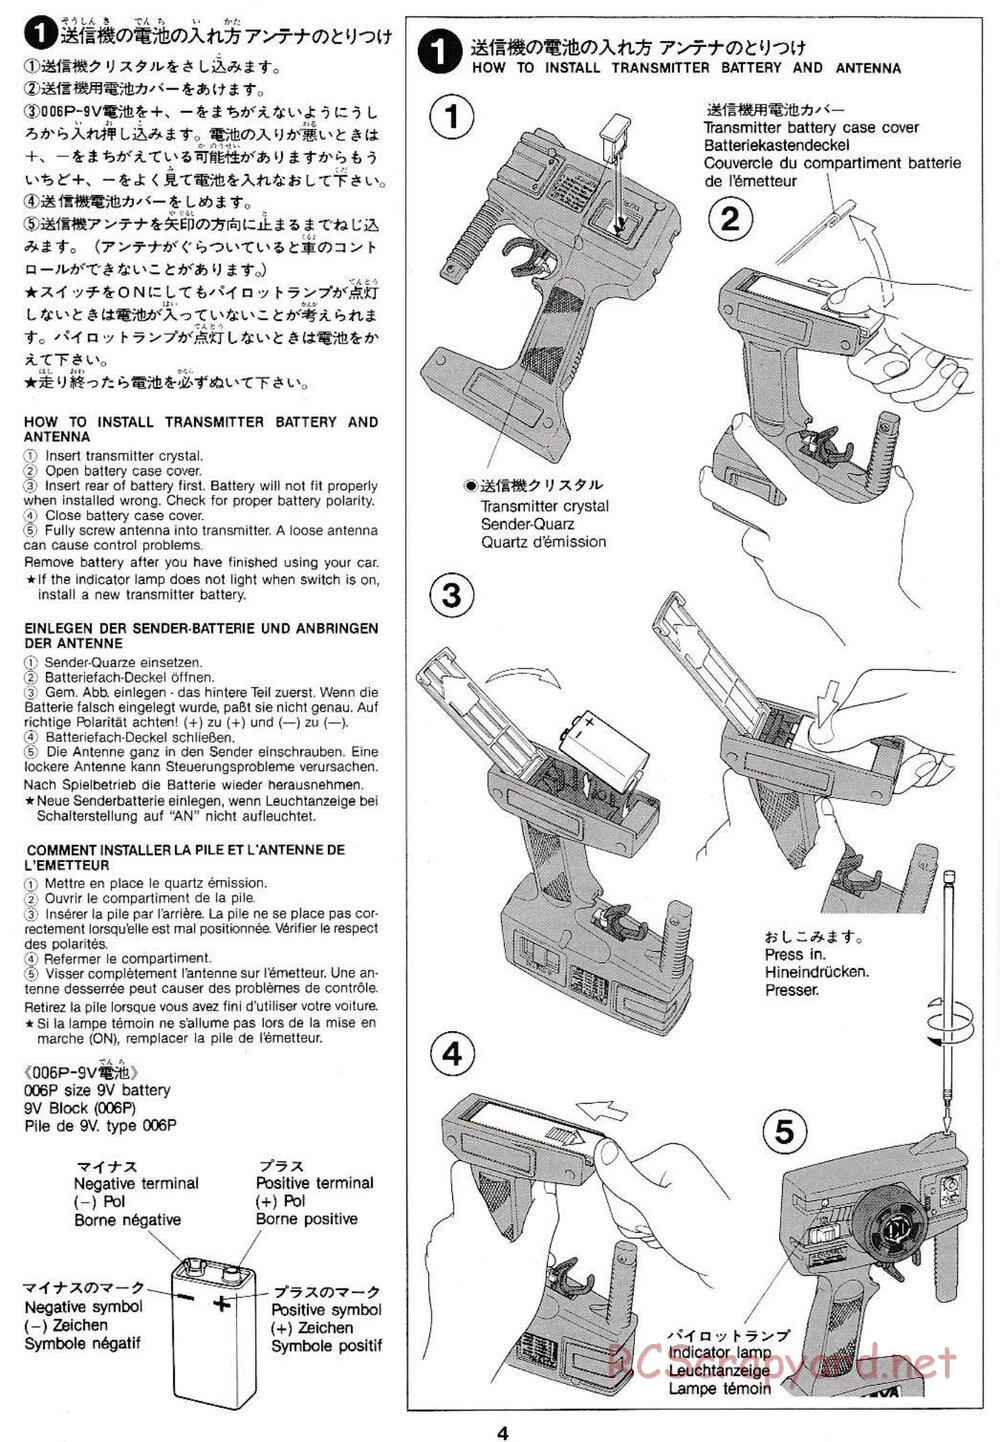 Tamiya - Ferrari F40 QD Chassis - Manual - Page 4